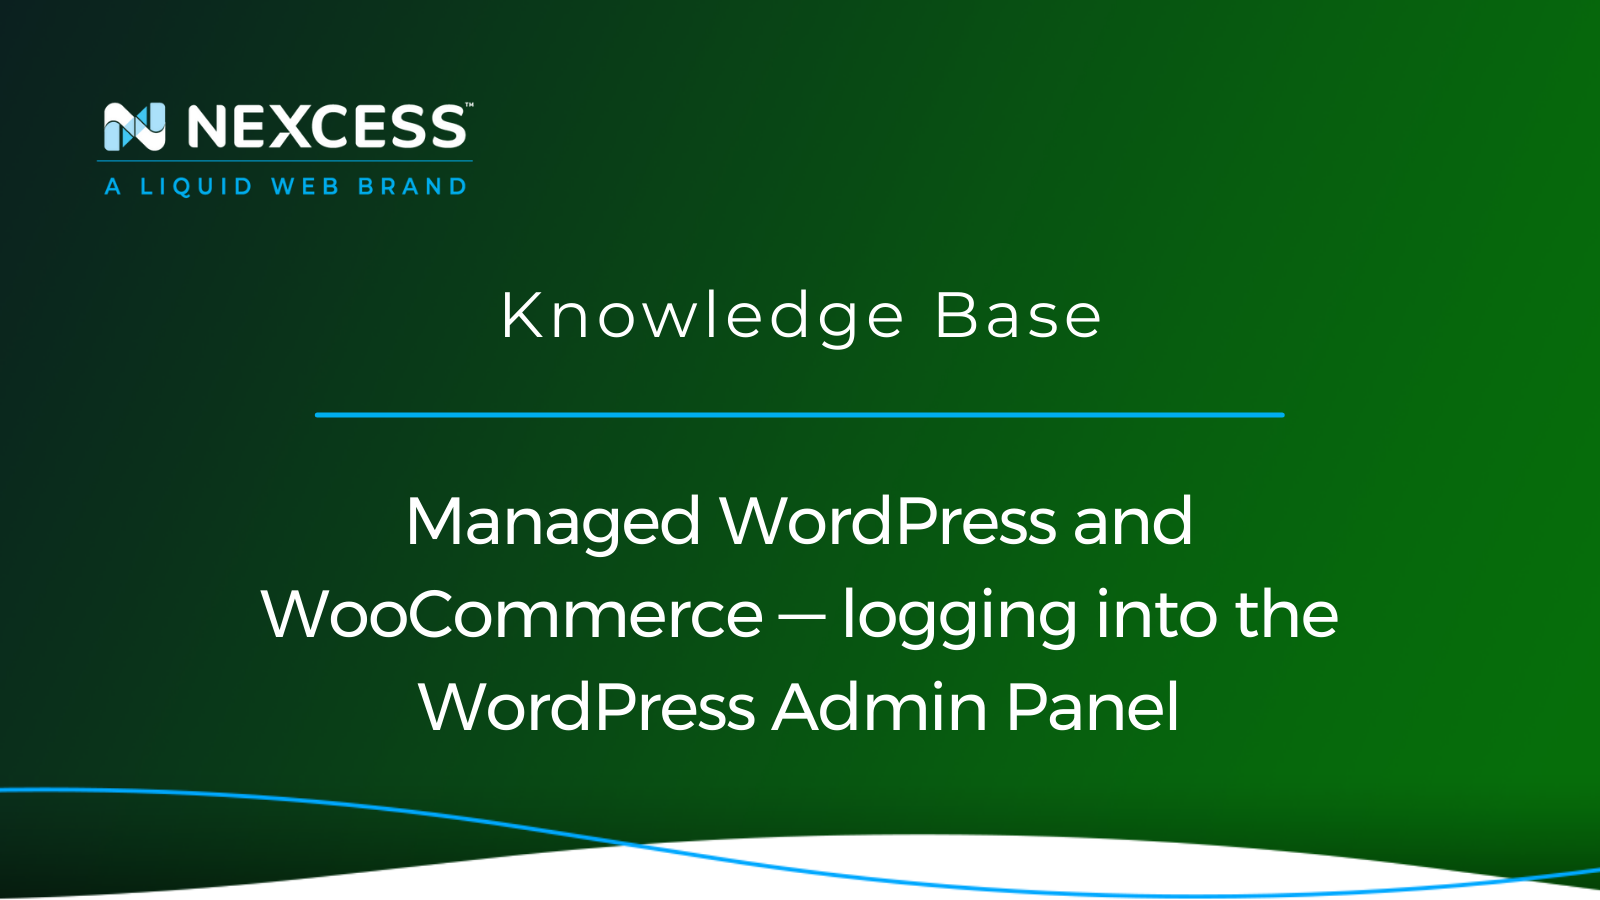 Managed WordPress and WooCommerce — logging into the WordPress Admin Panel